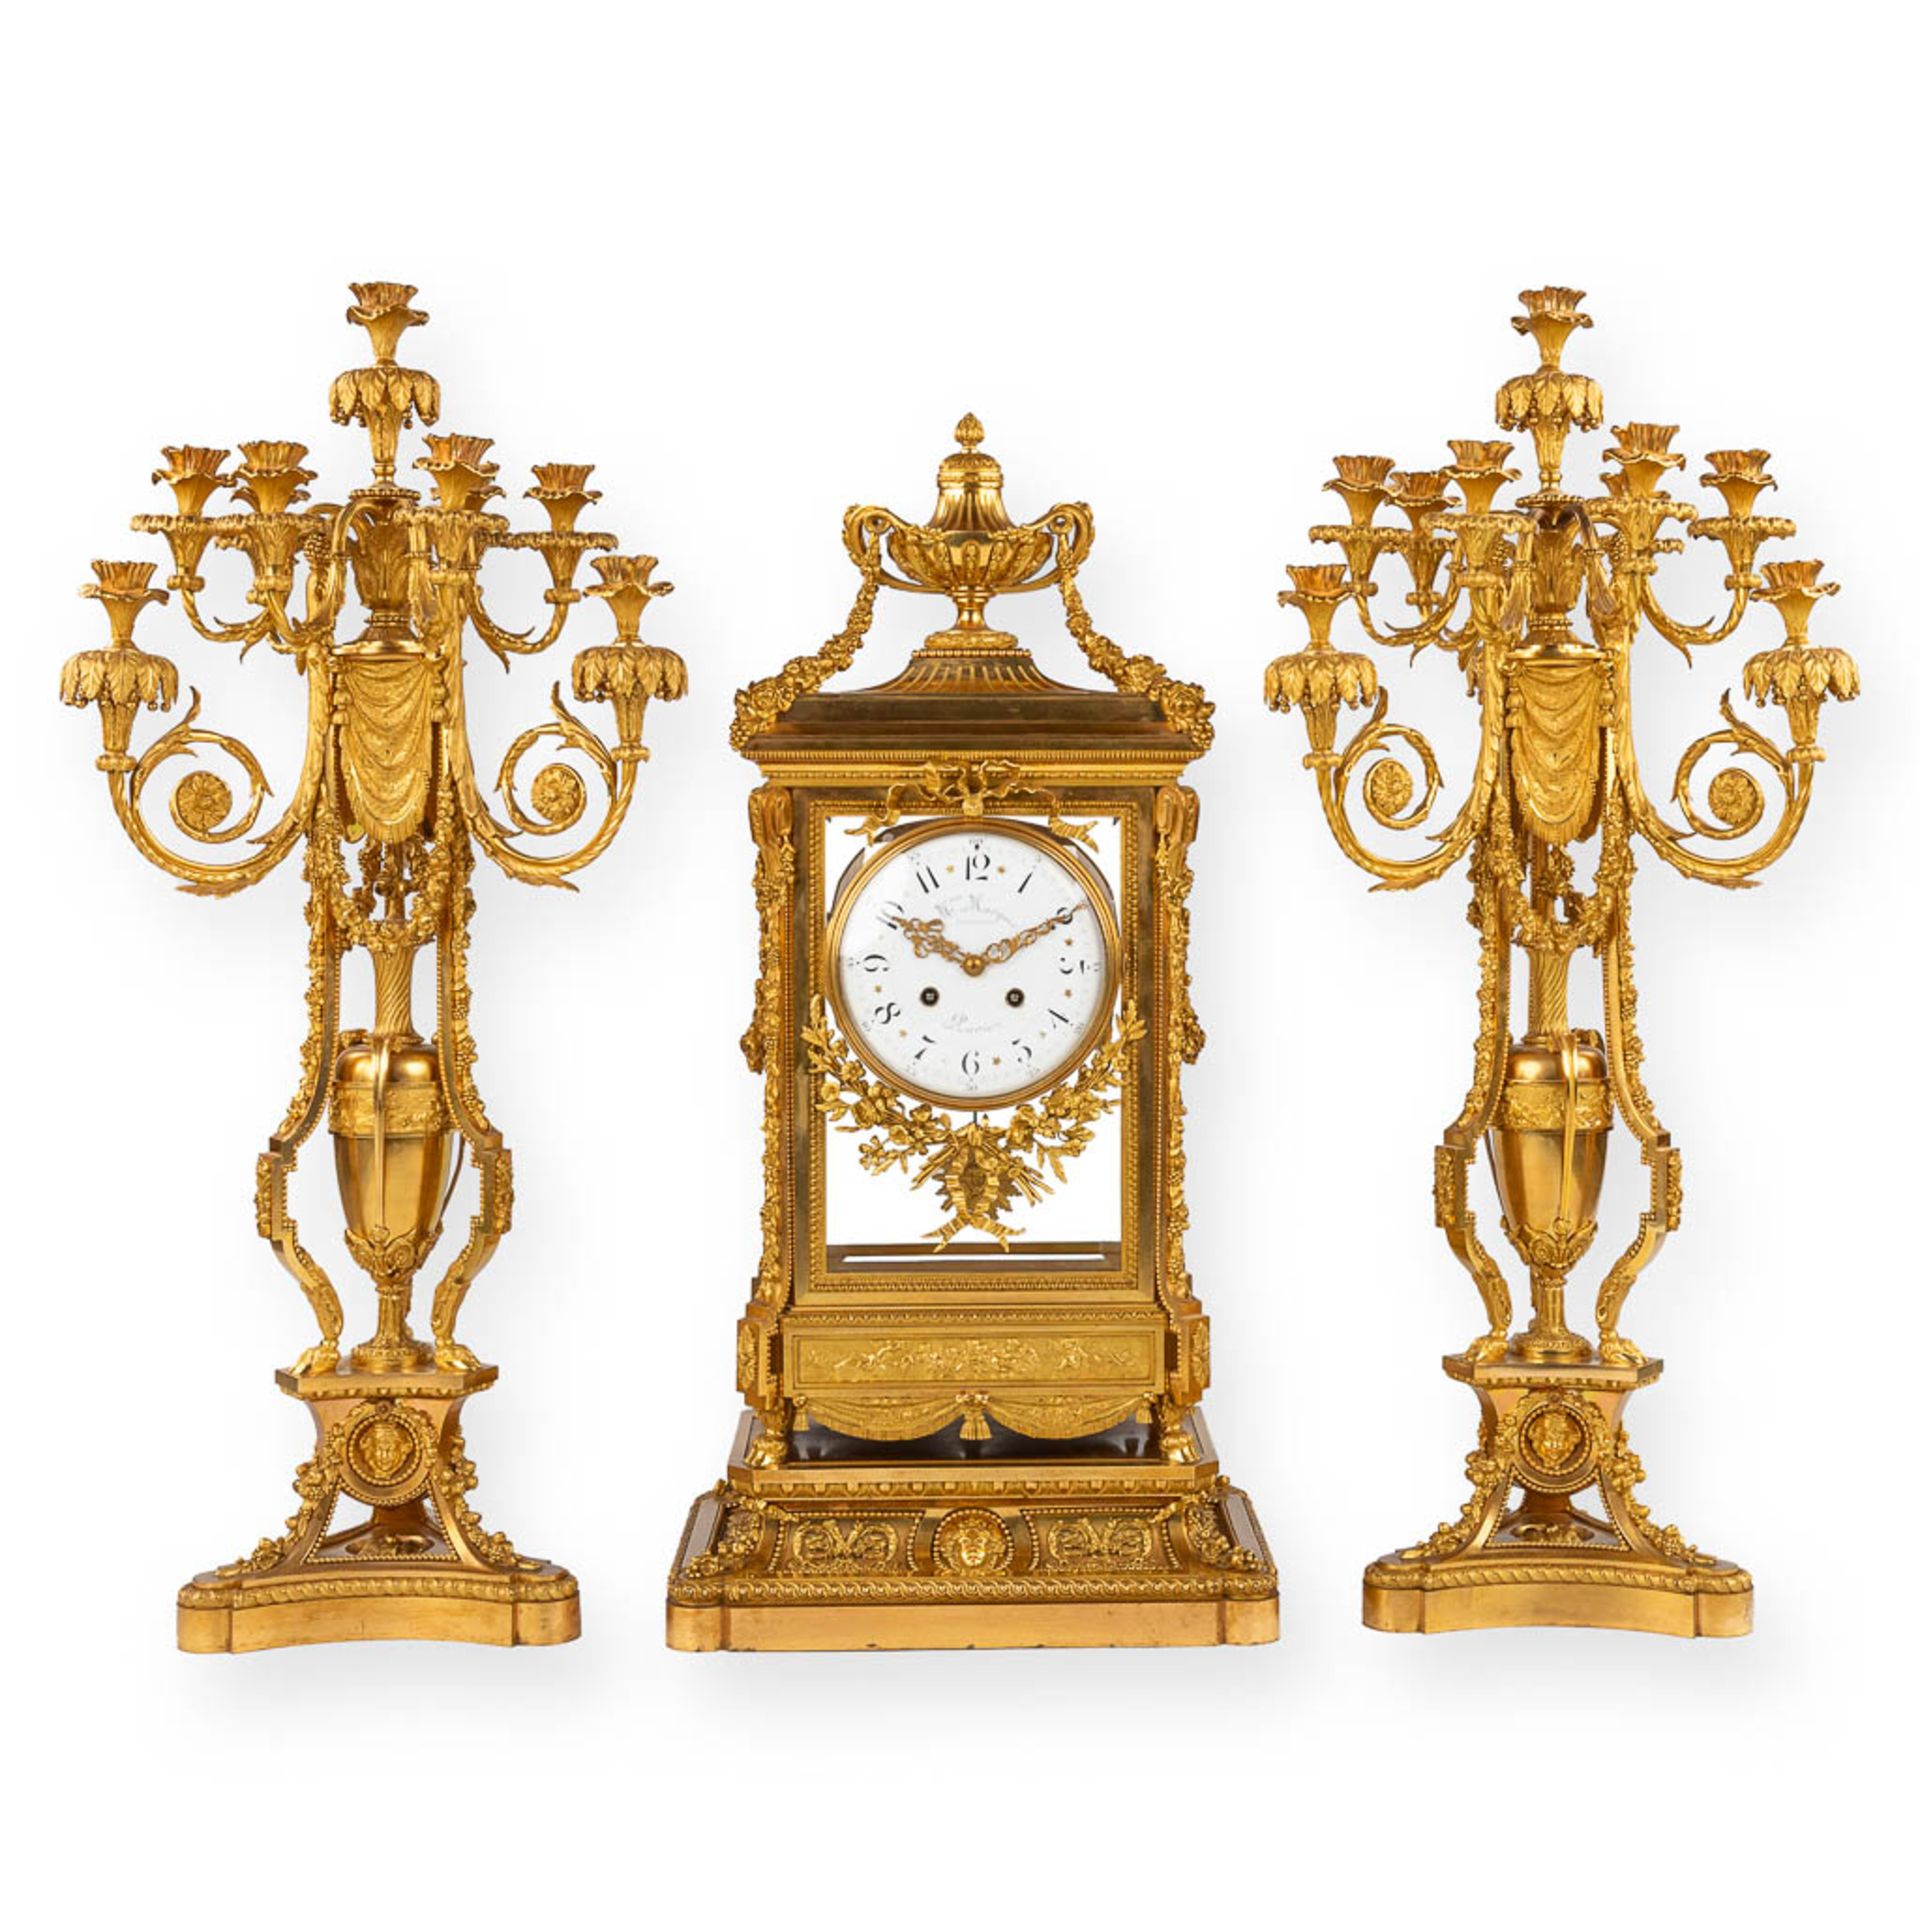 An imposing three-piece mantle garniture clock and candelabra, gilt bronze in Louis XVI style. Maiso